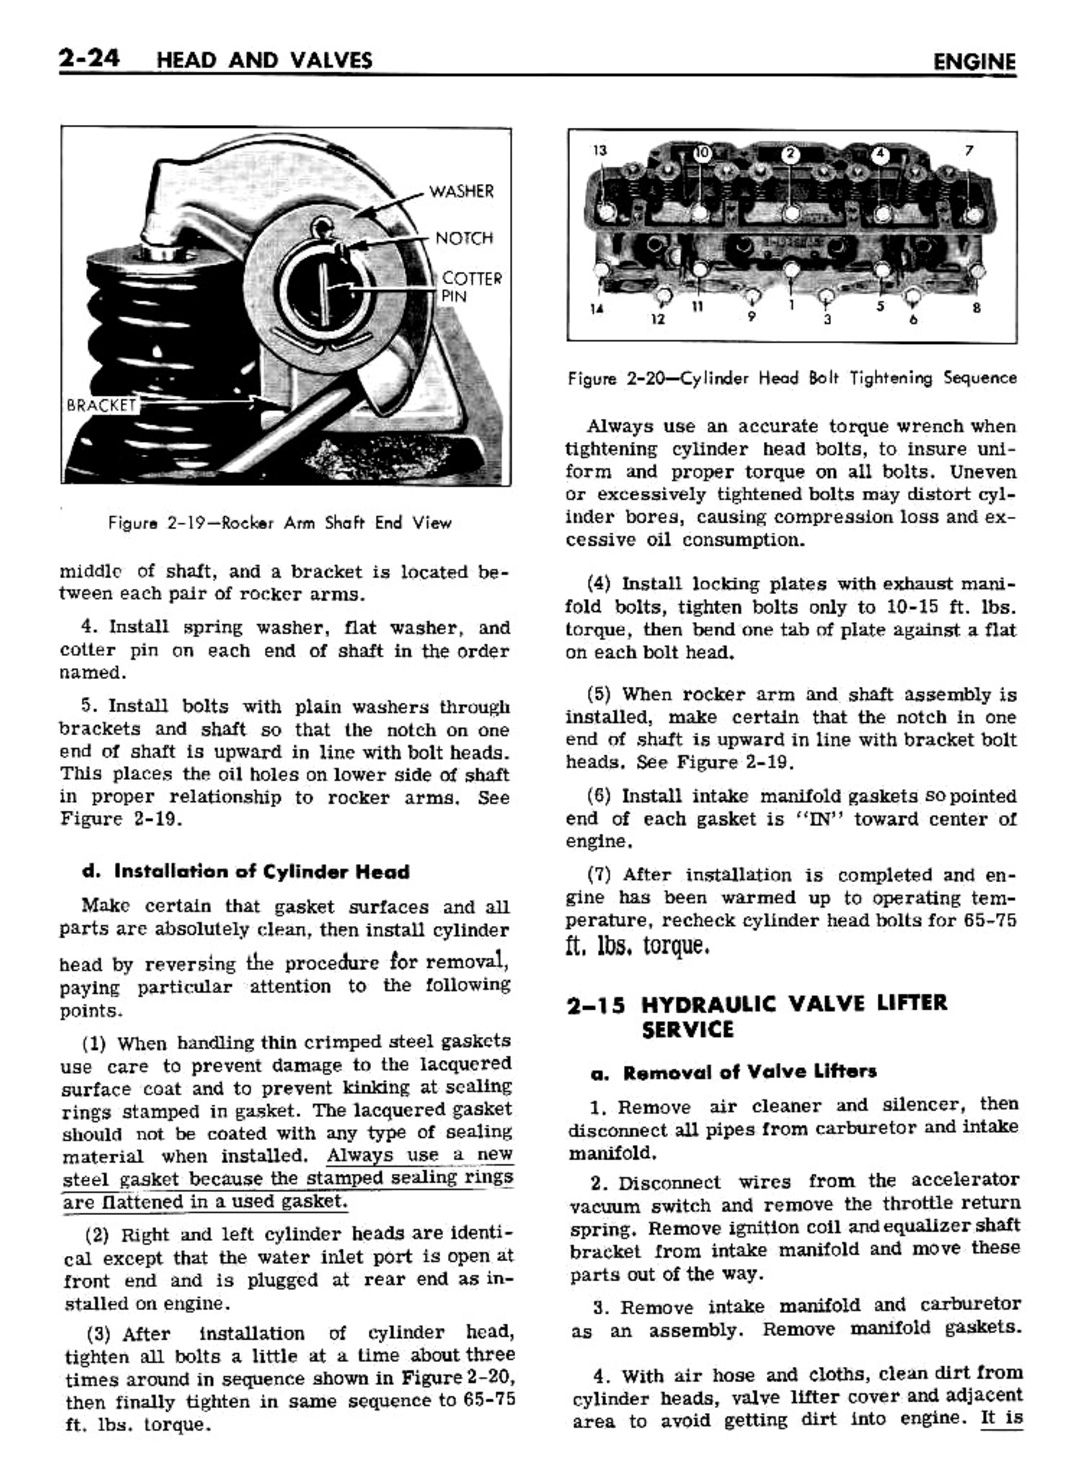 n_03 1961 Buick Shop Manual - Engine-024-024.jpg